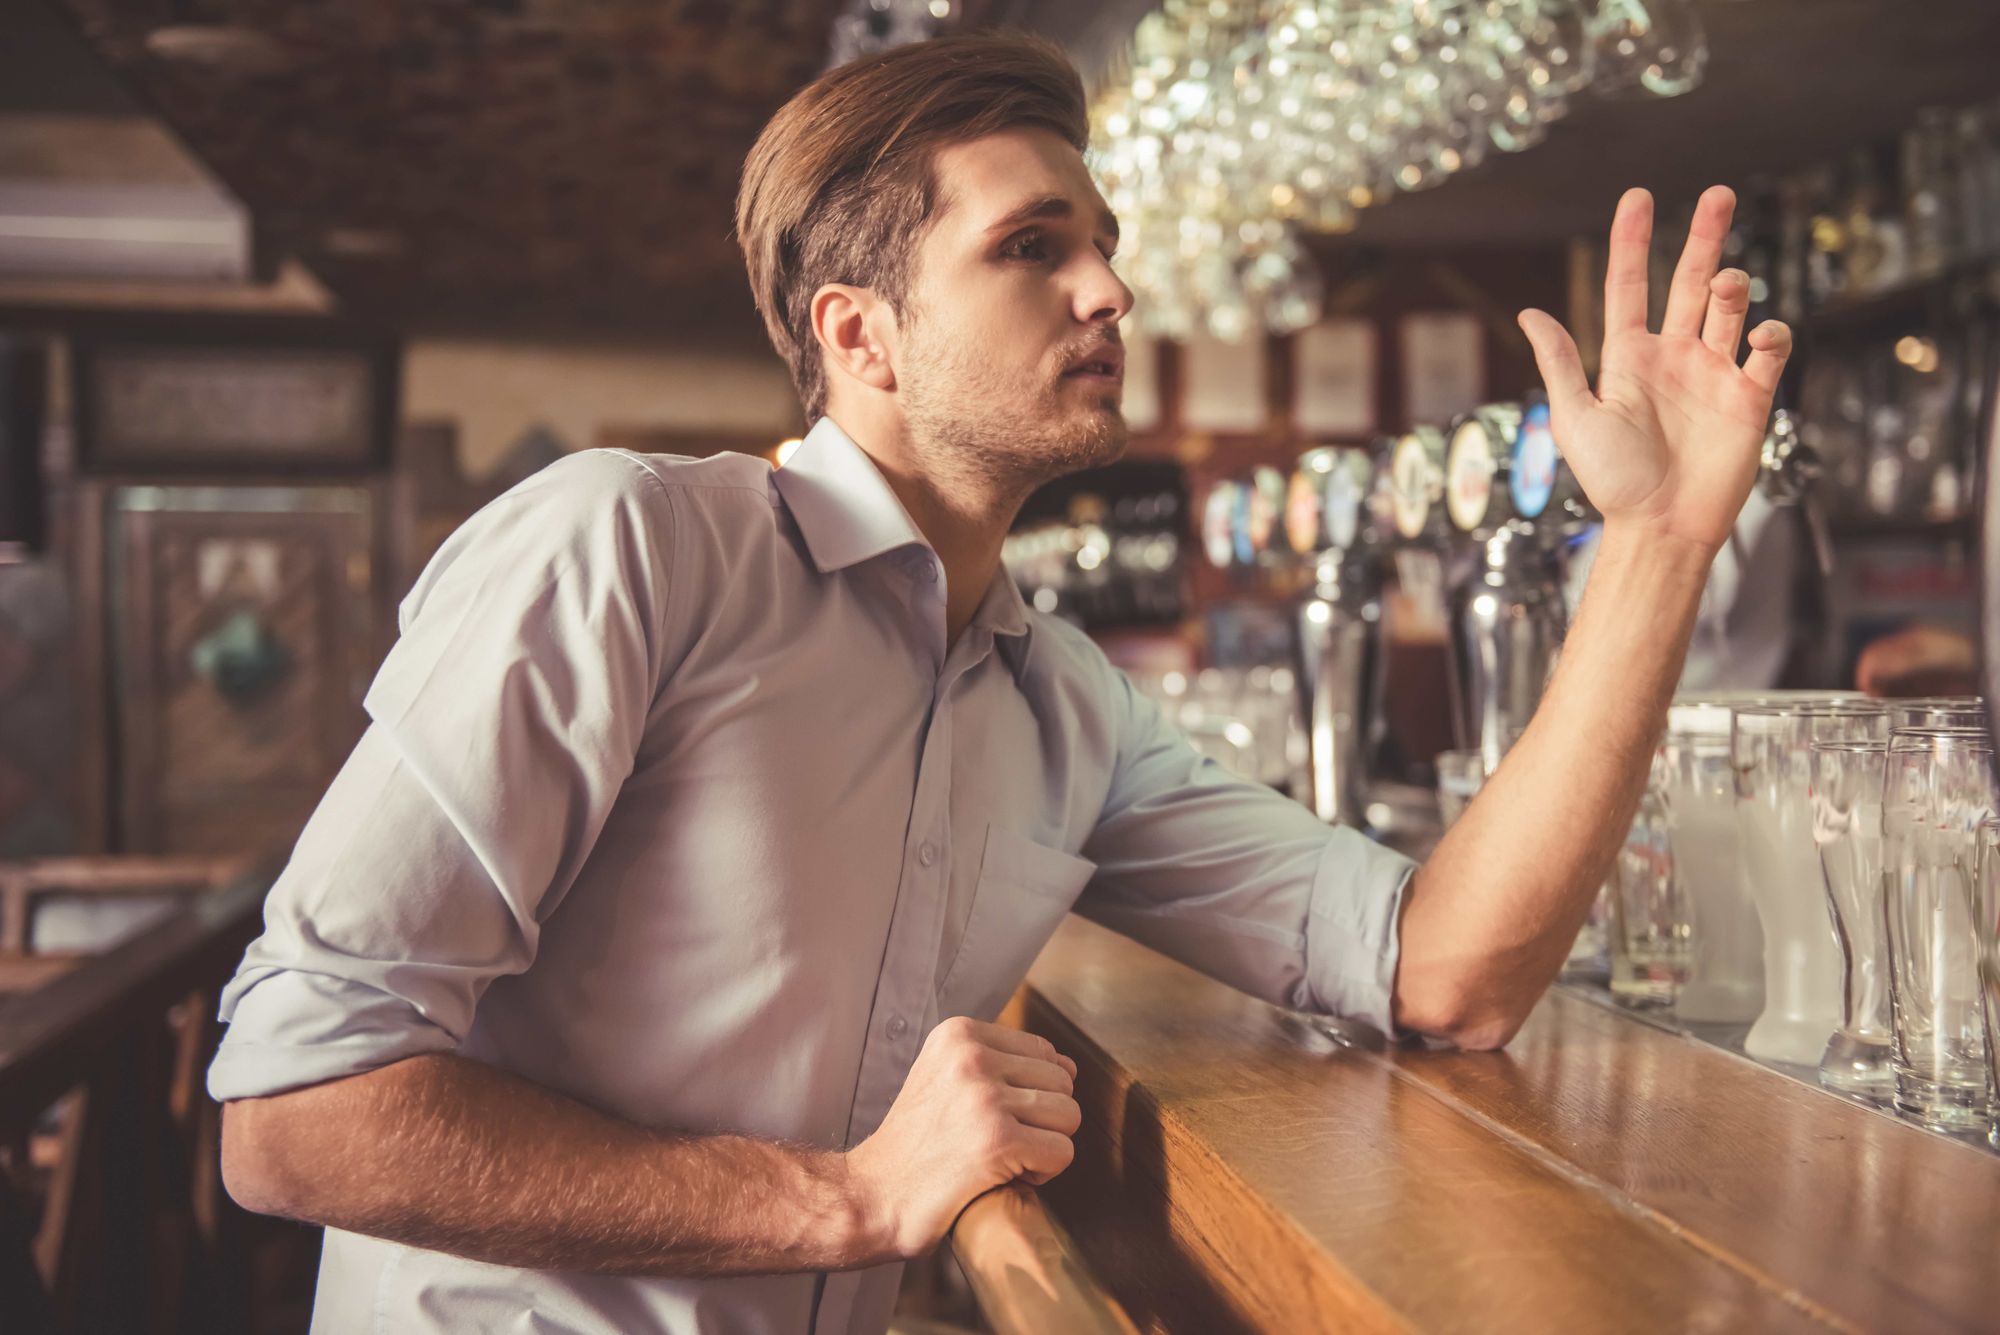 A man at a bar raises his hand to order a drink.